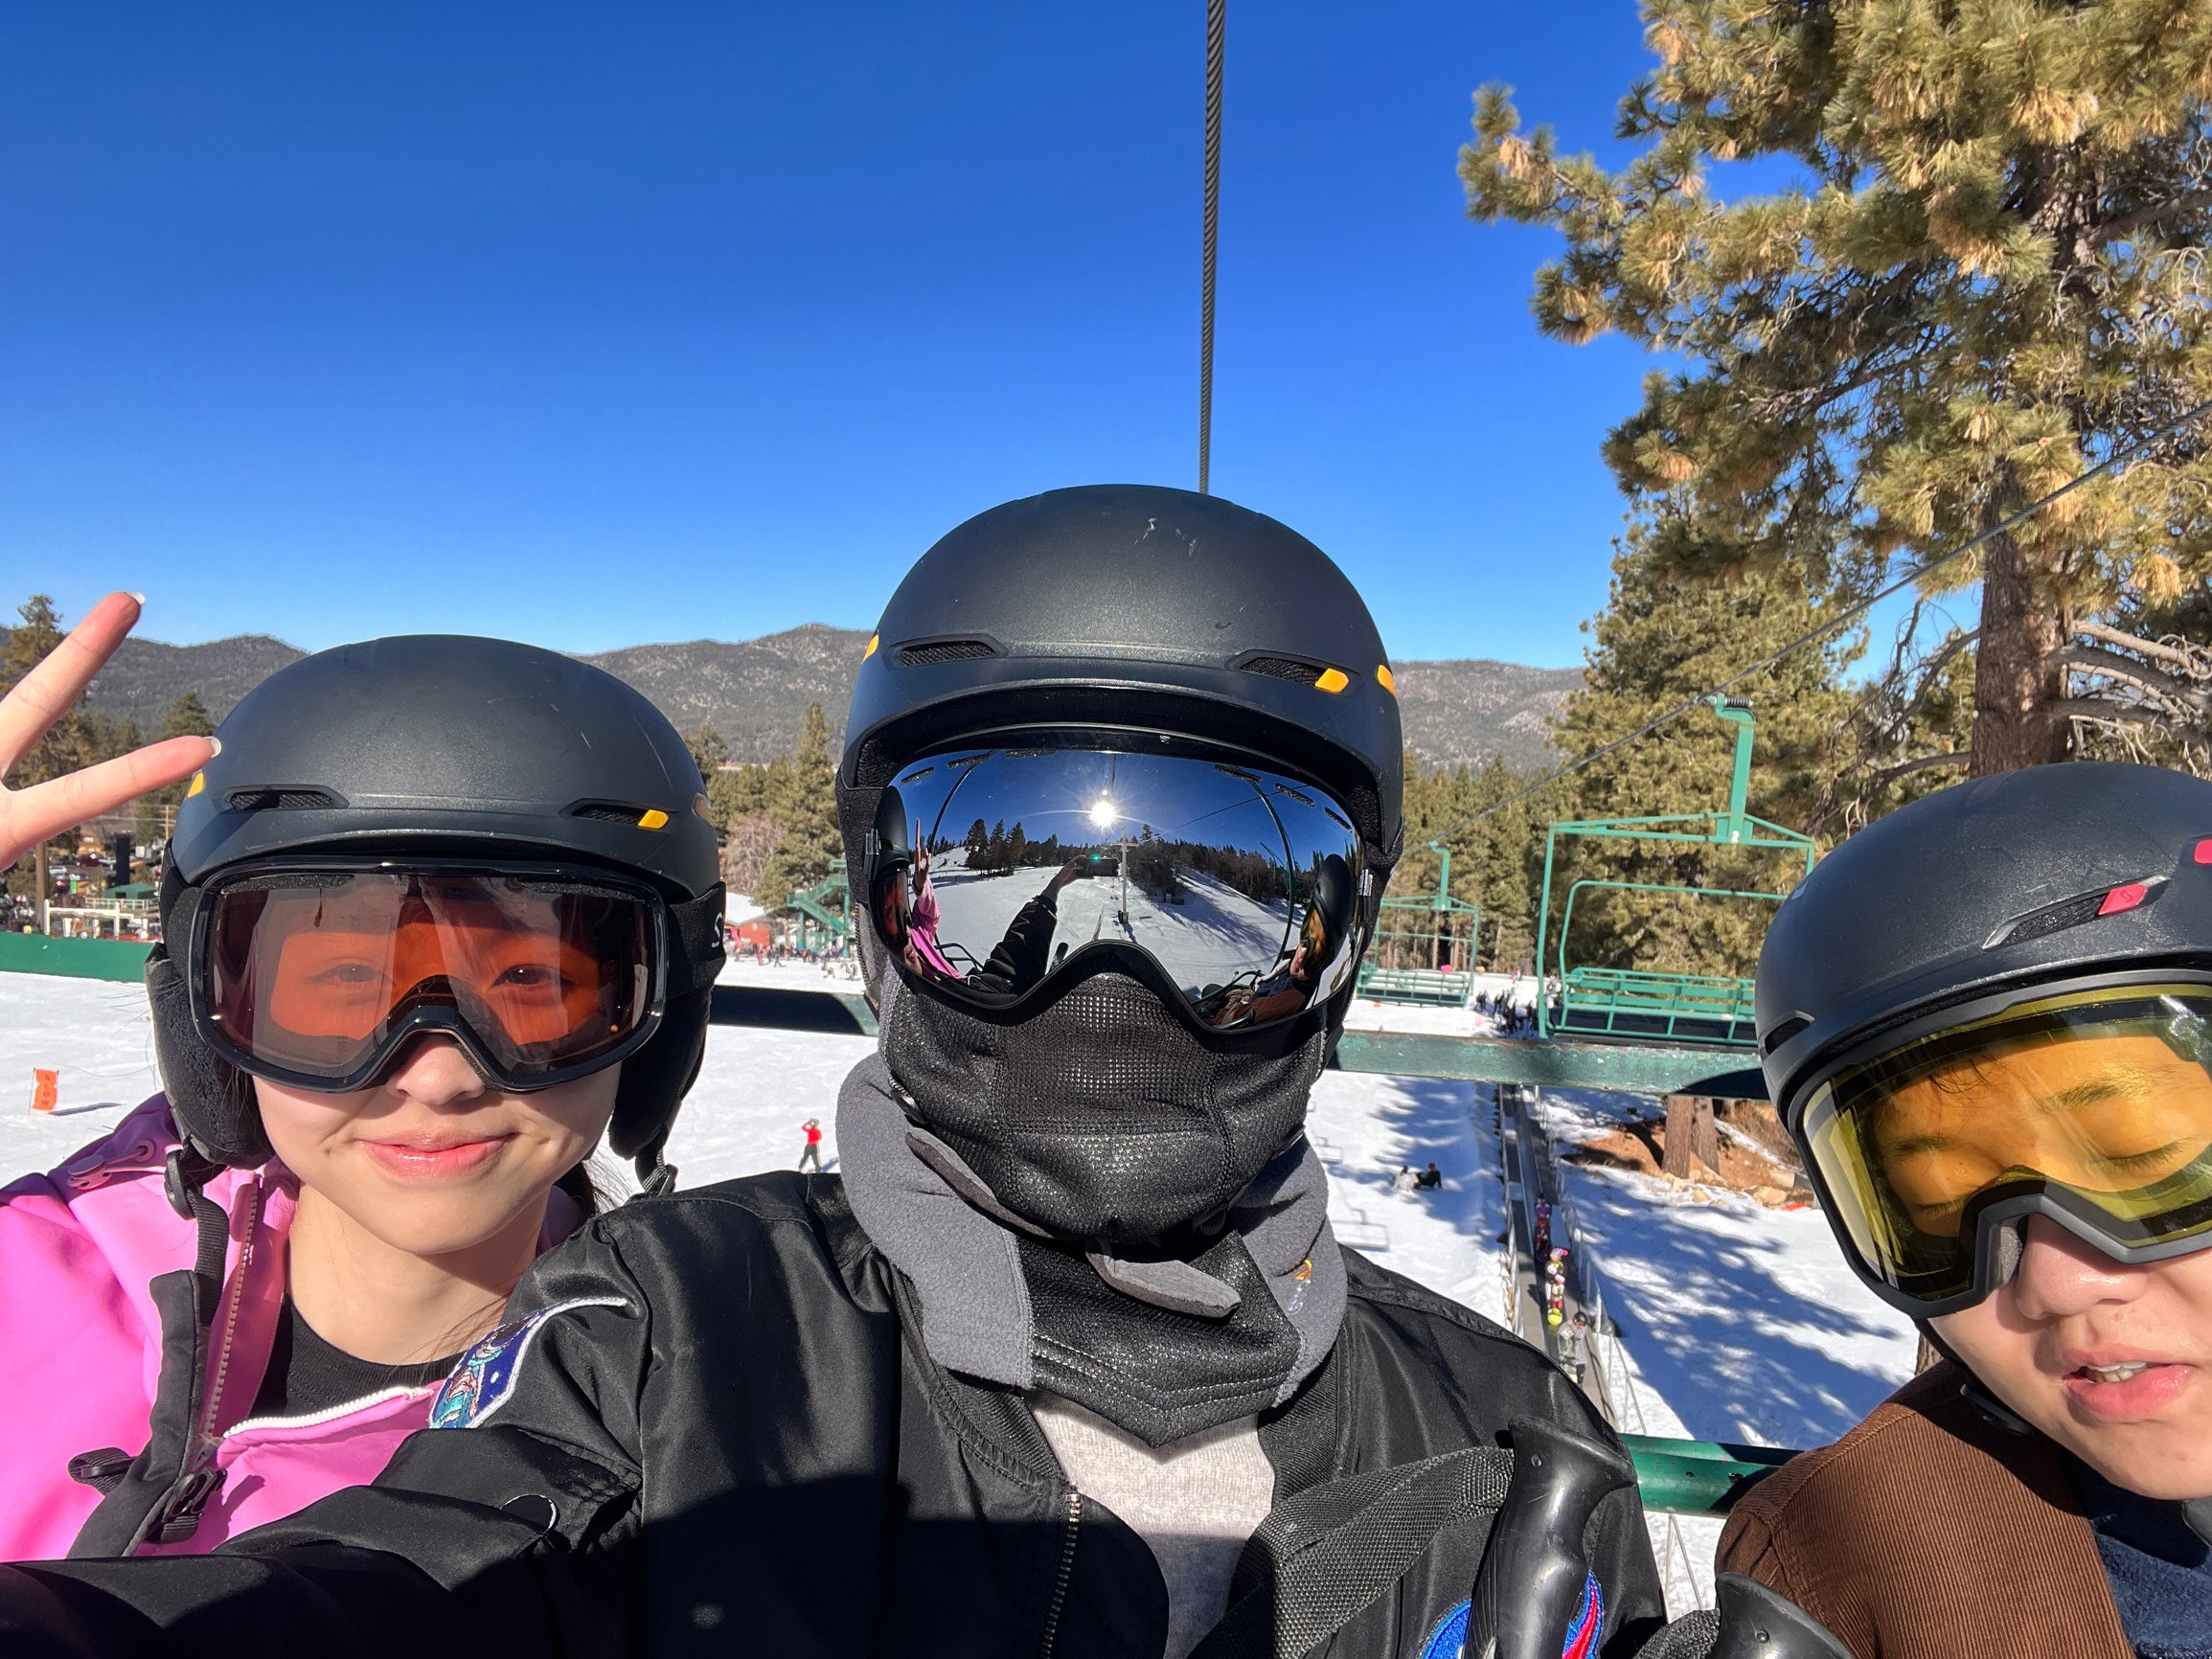 Three students wearing ski gear on a goondola.